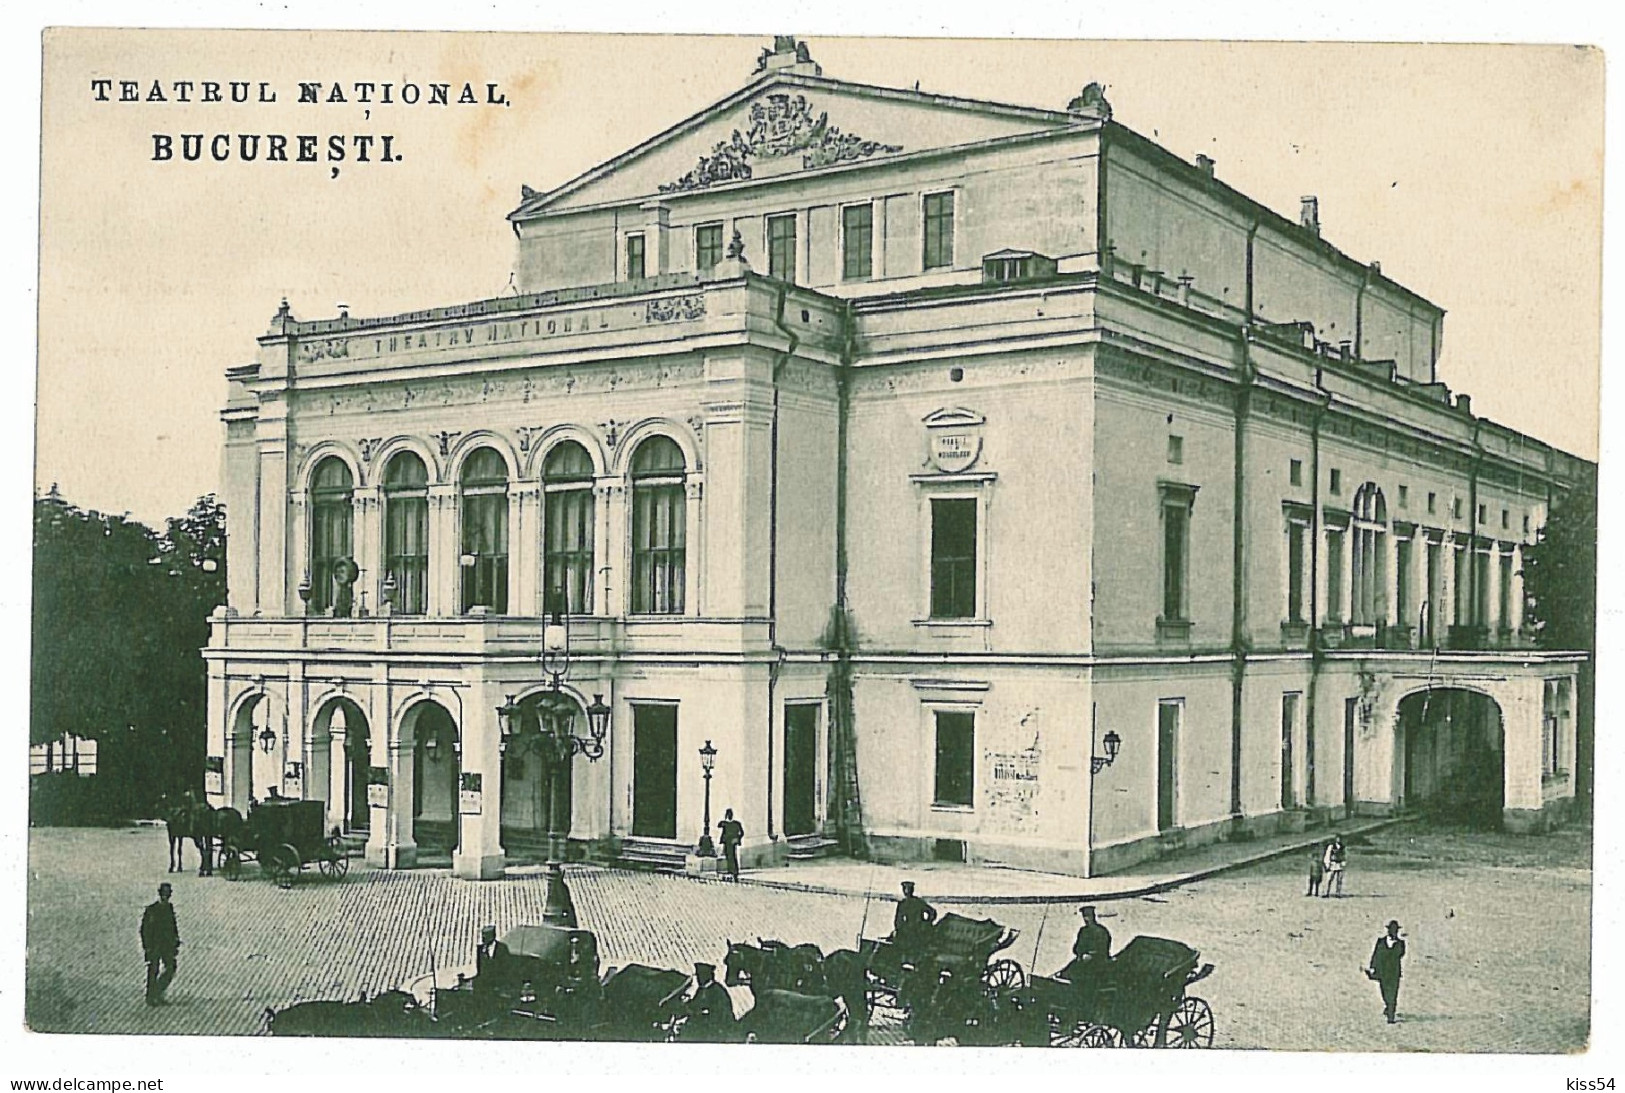 RO 36 - 2751 BUCURESTI, National Theatre, Carriages, Romania - Old Postcard - Unused - Romania